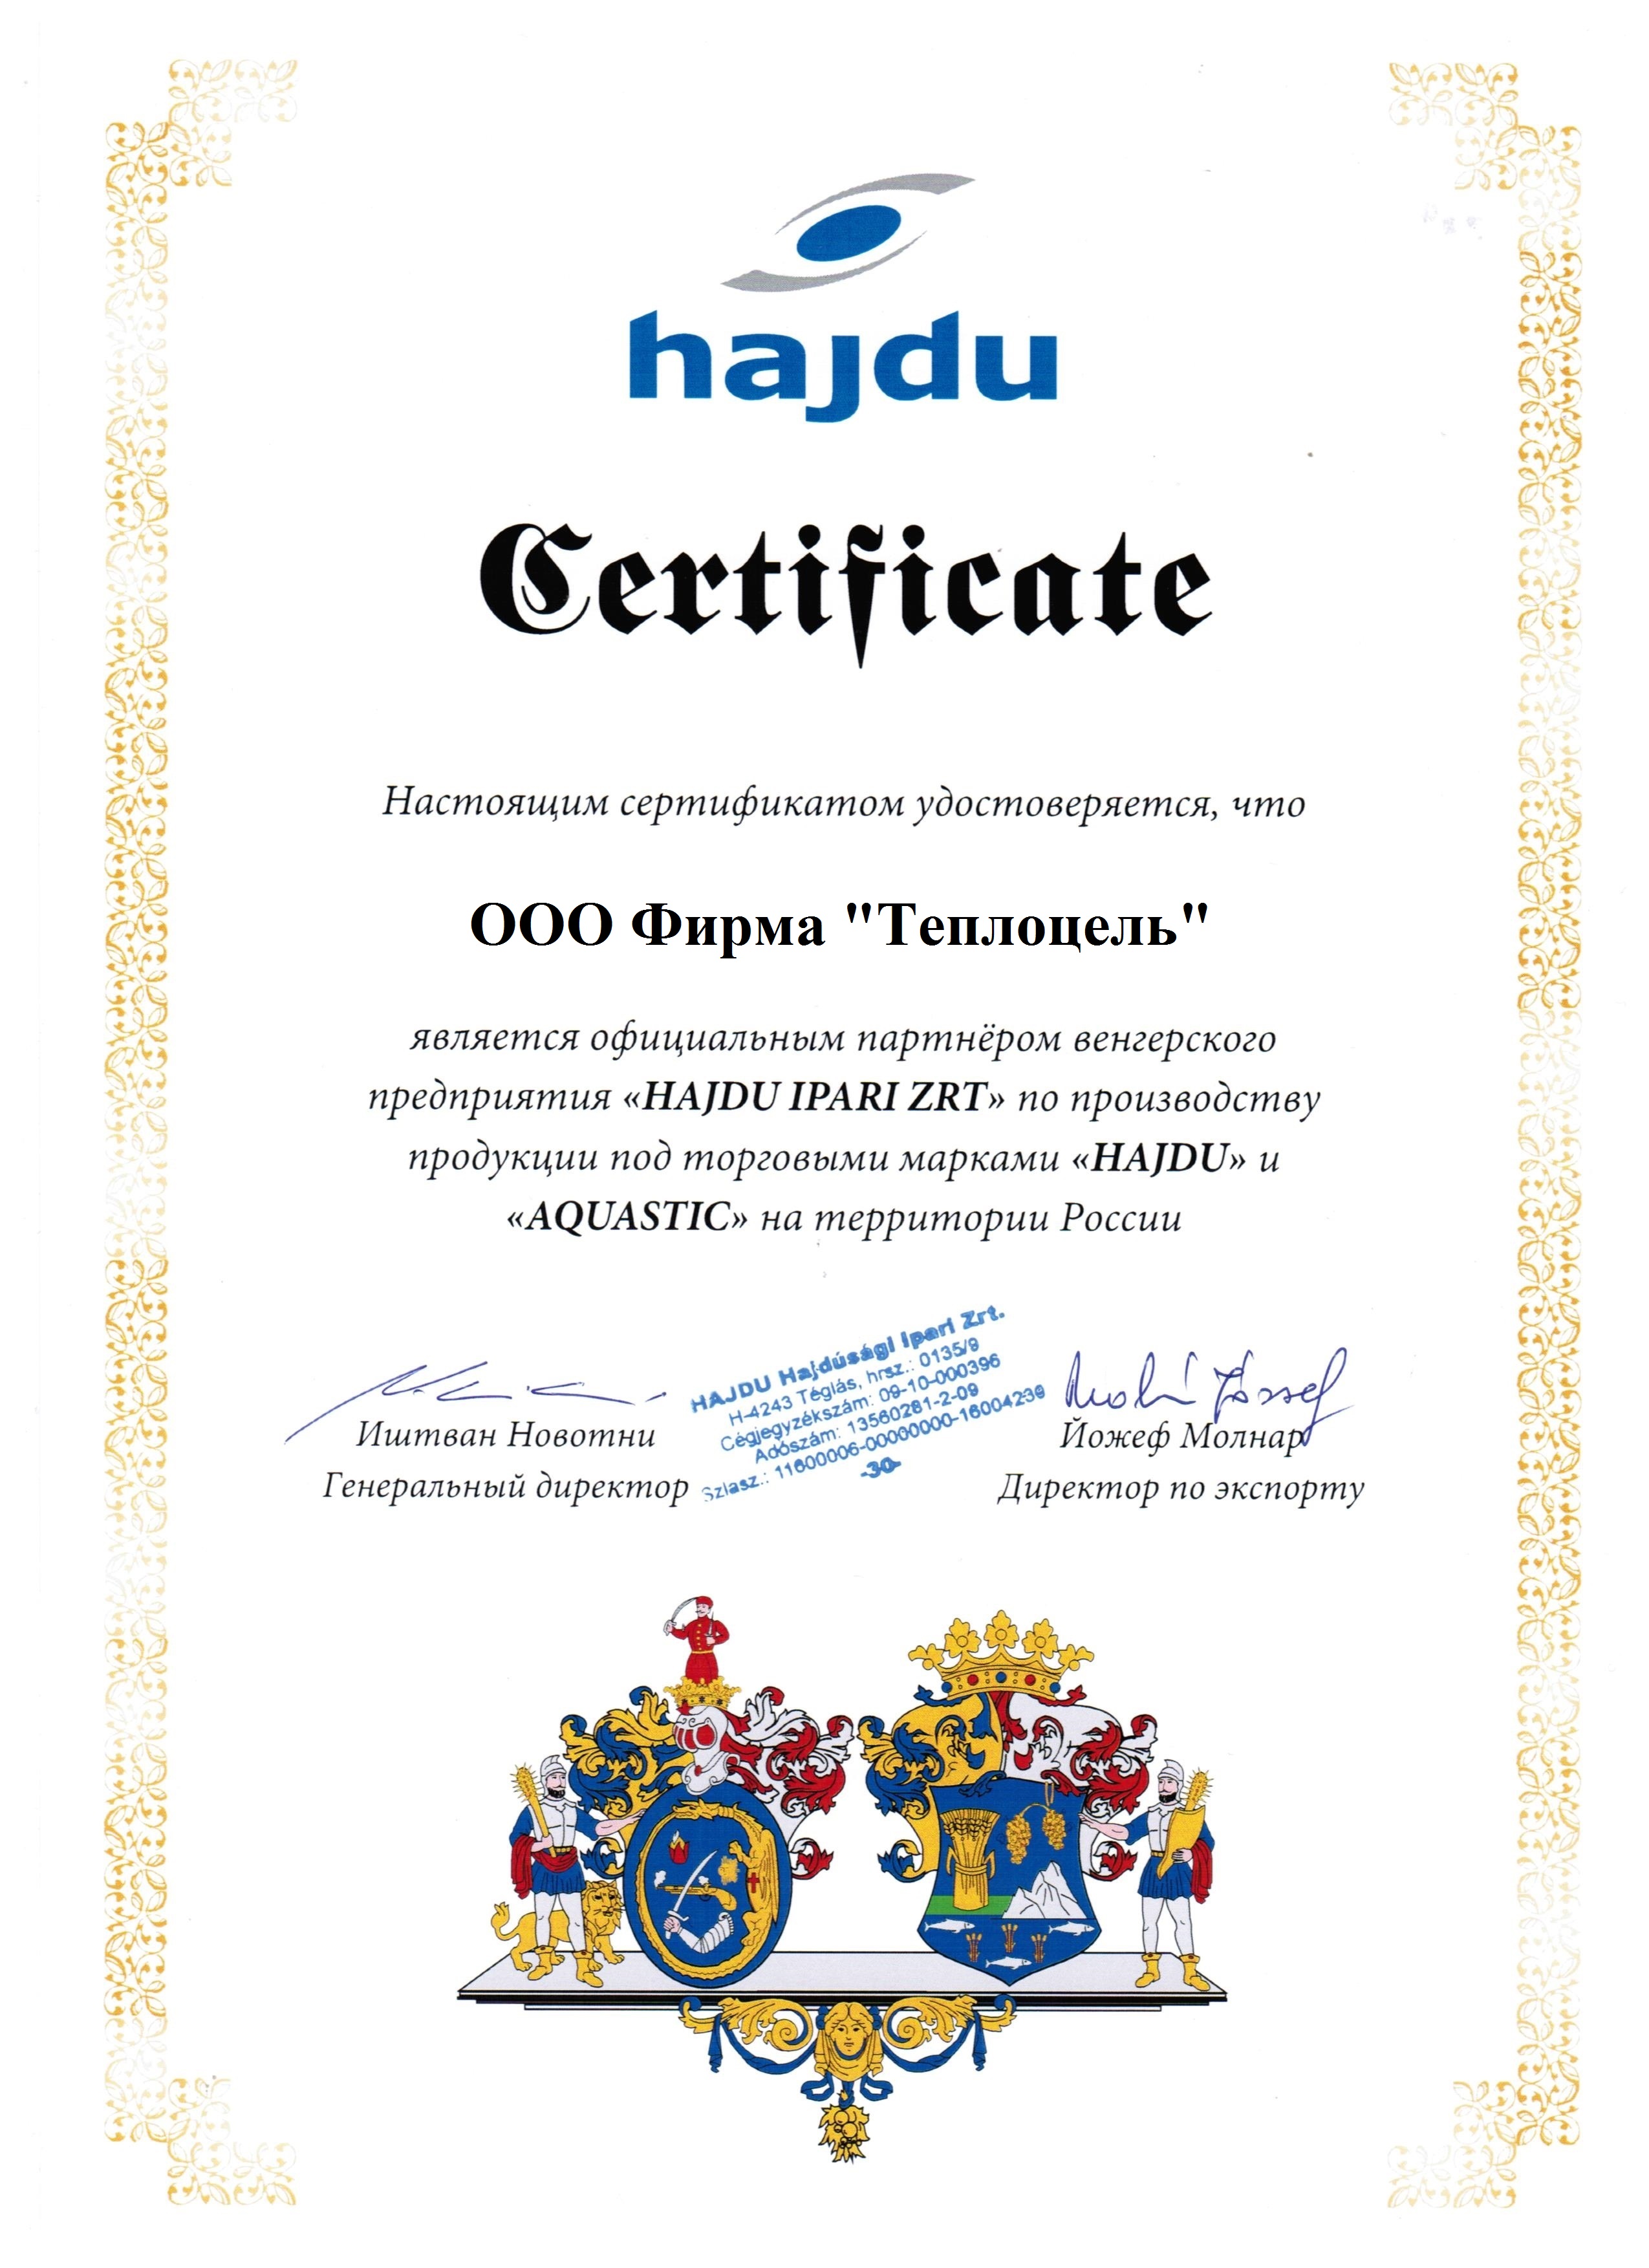 Hajdu certificate